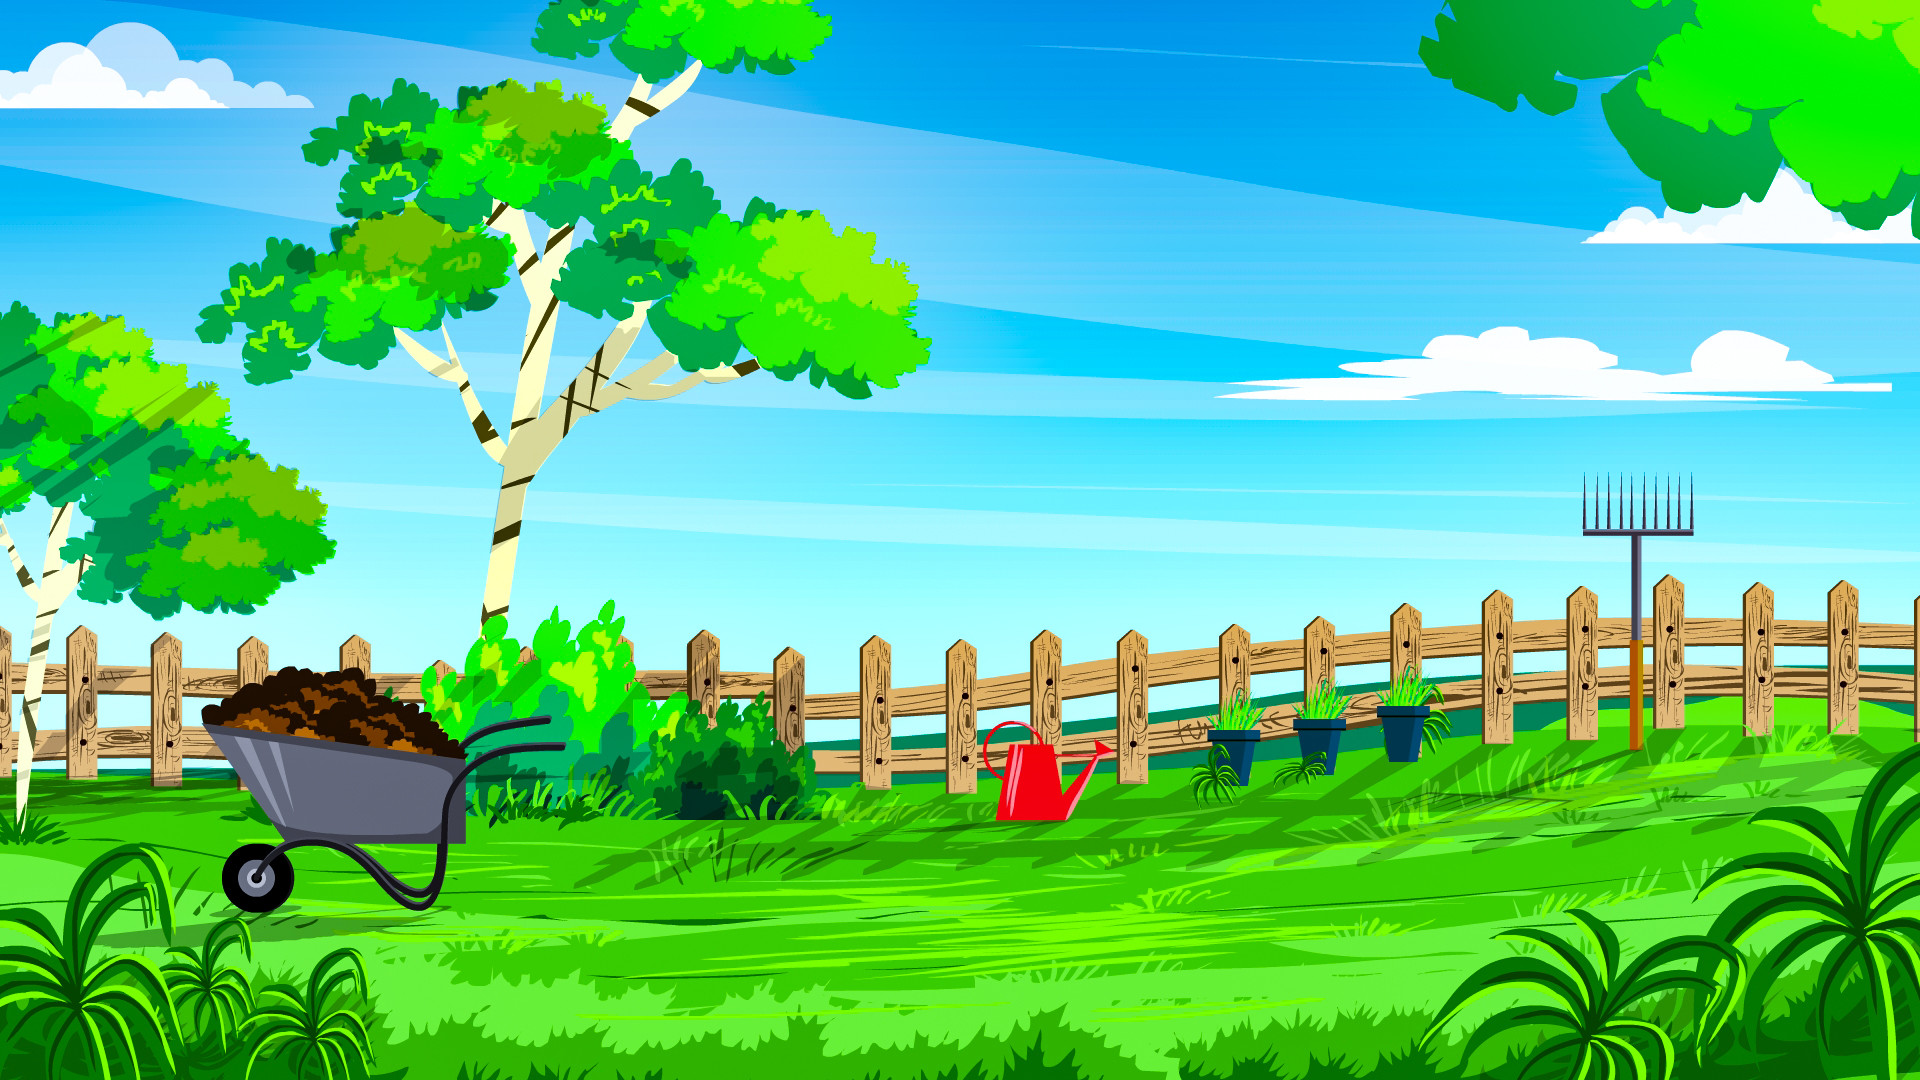 ArtStation - 2D animation landscape background